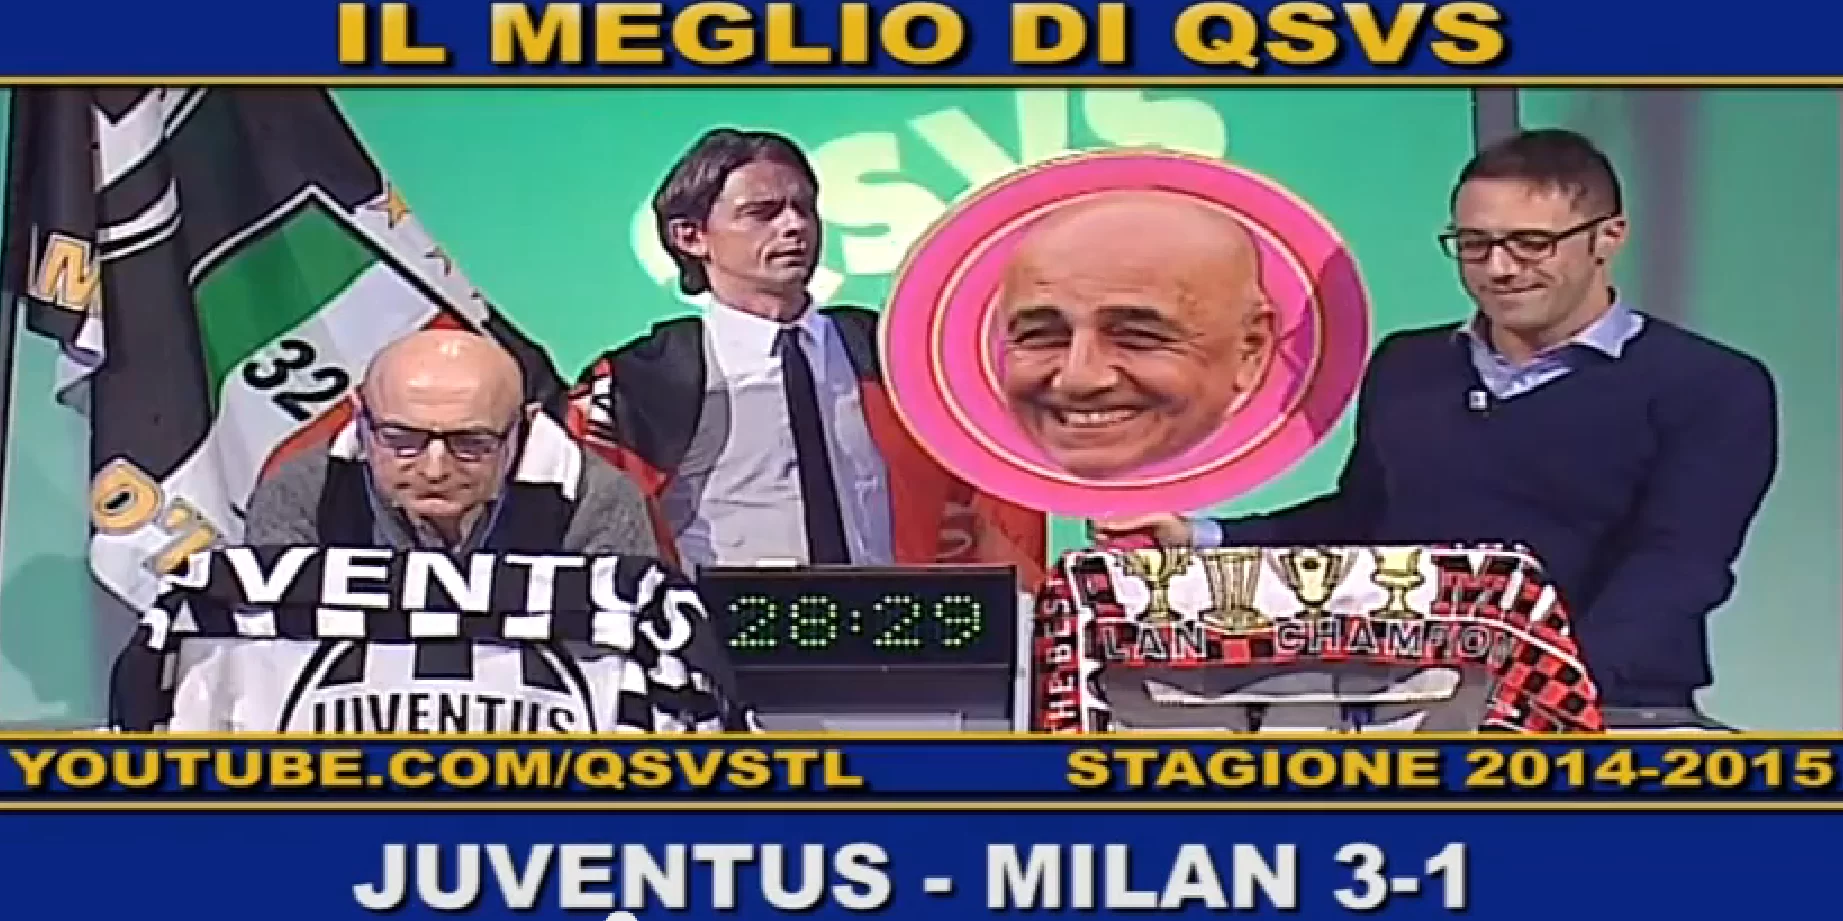 VIDEO/ Le emozioni di Juventus-Milan raccontate da <i>Qsvs</i>